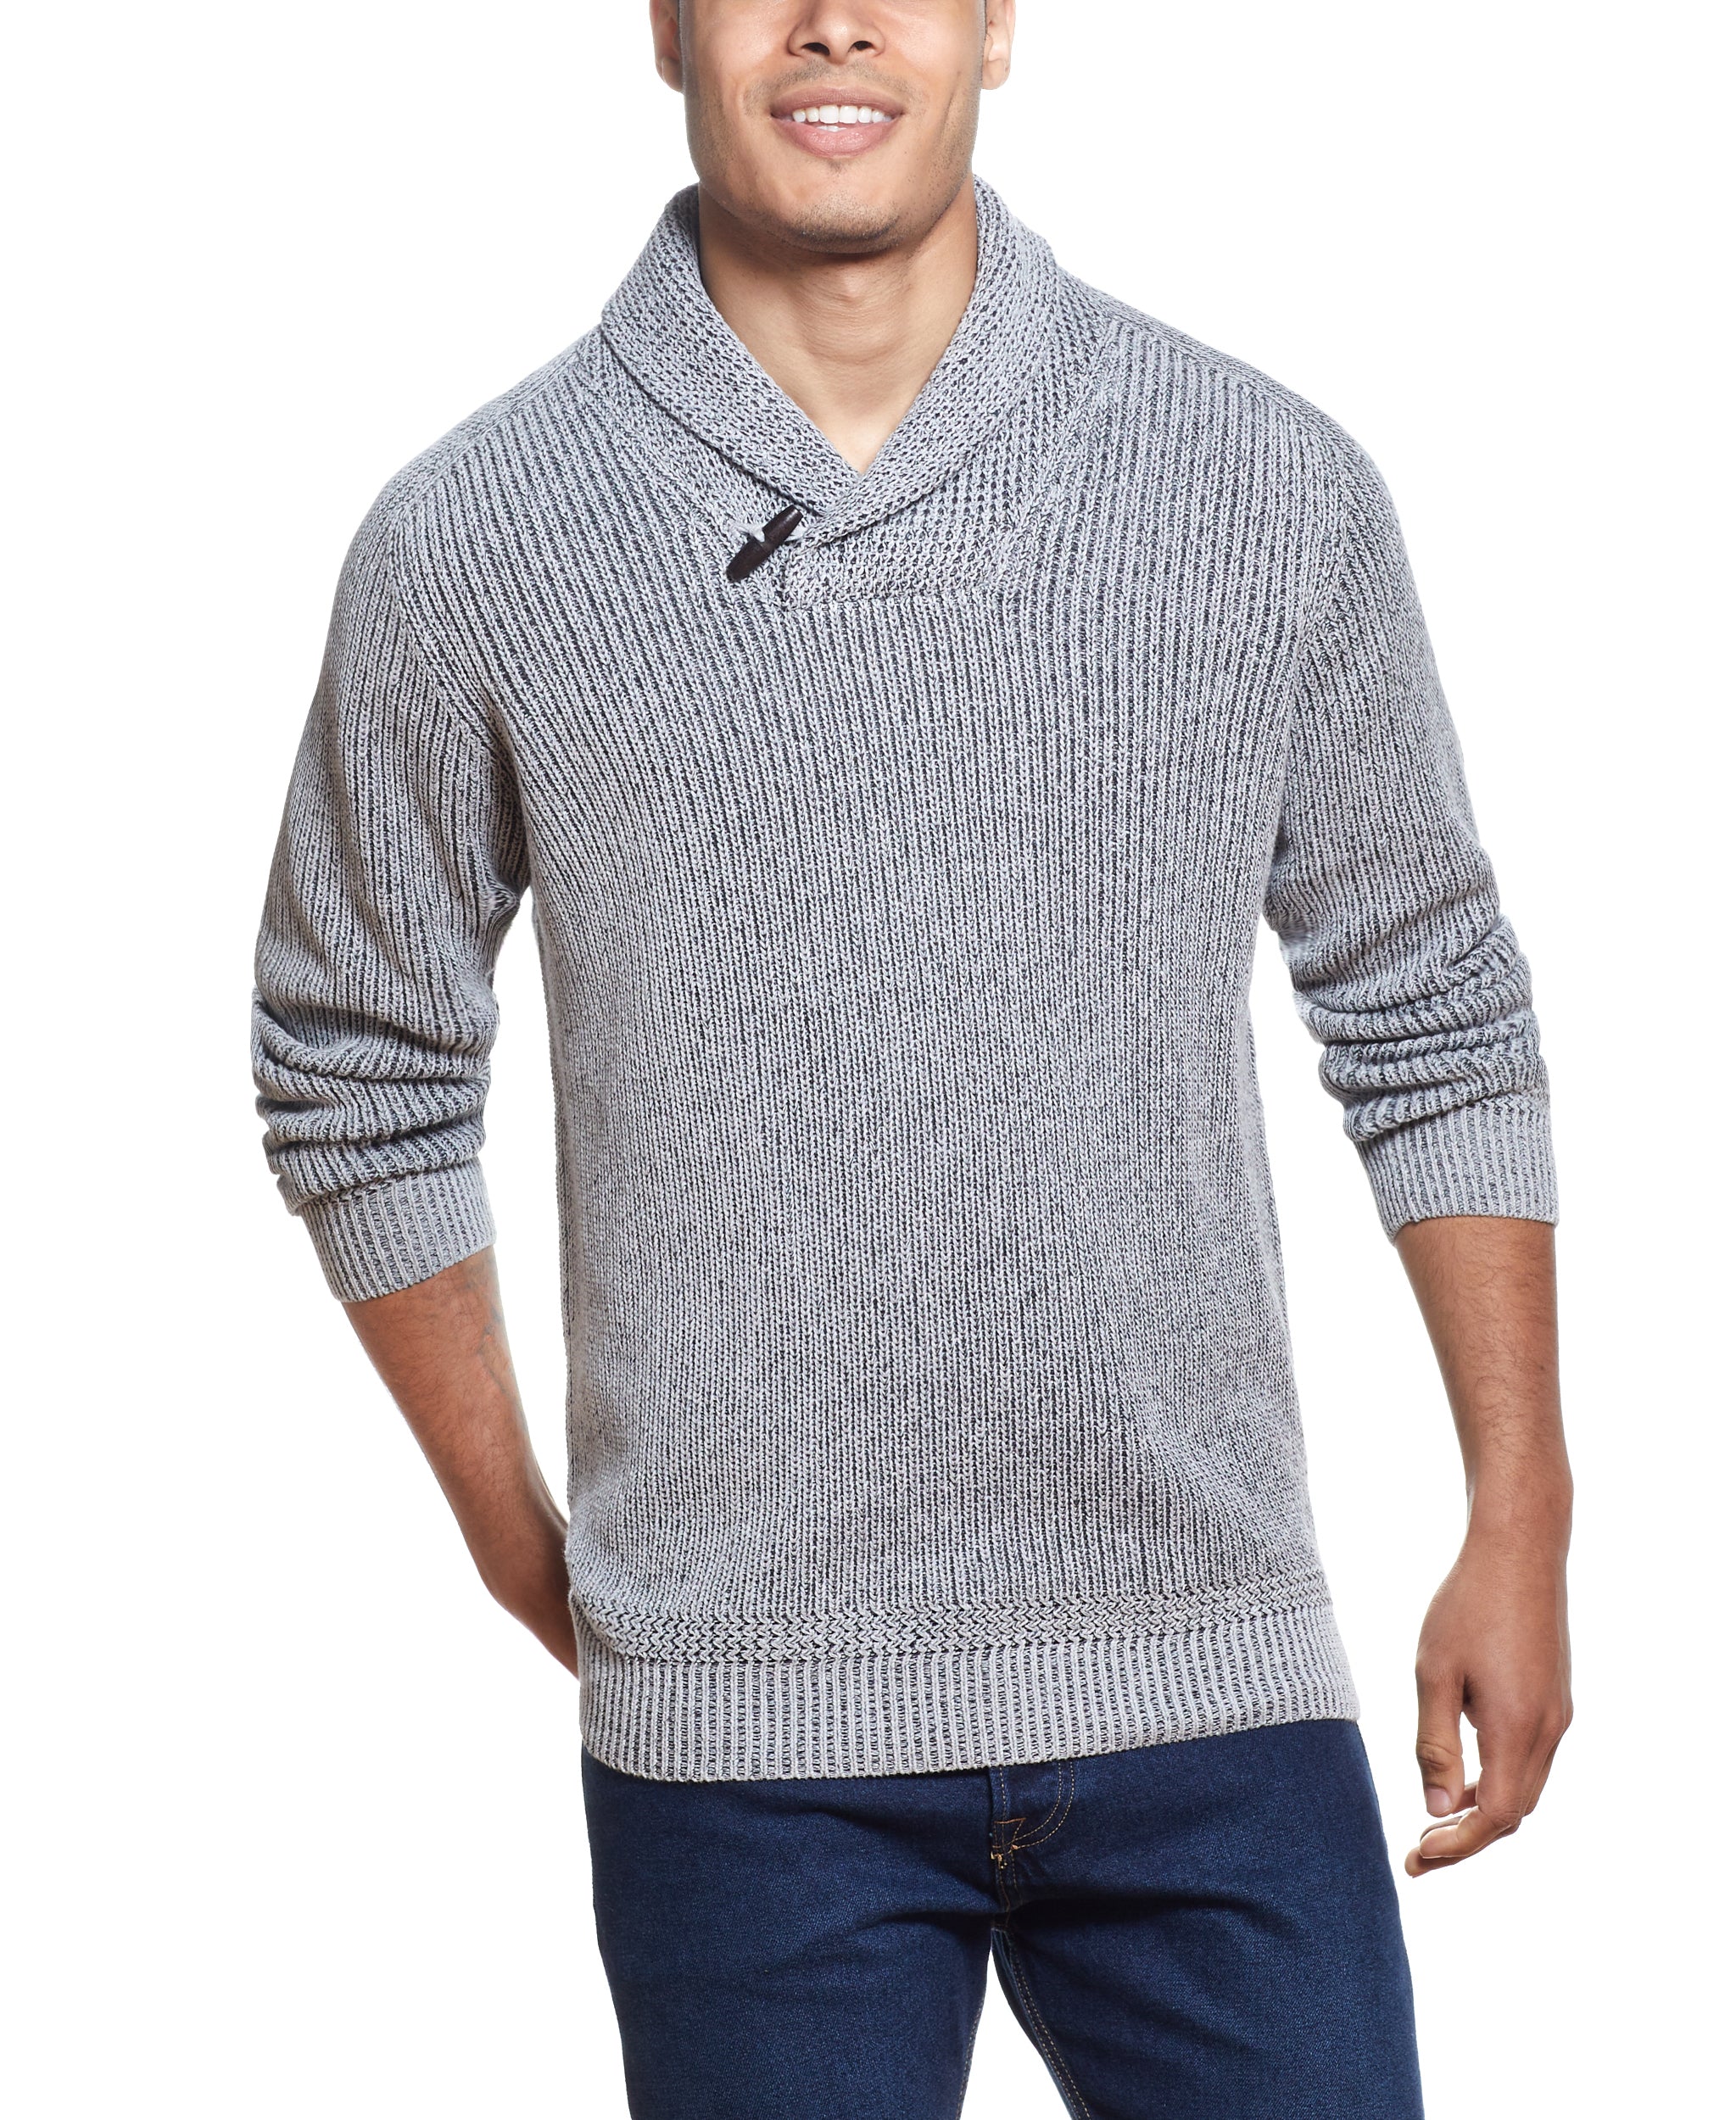 Pullover Shawl-Collar Sweater Pattern